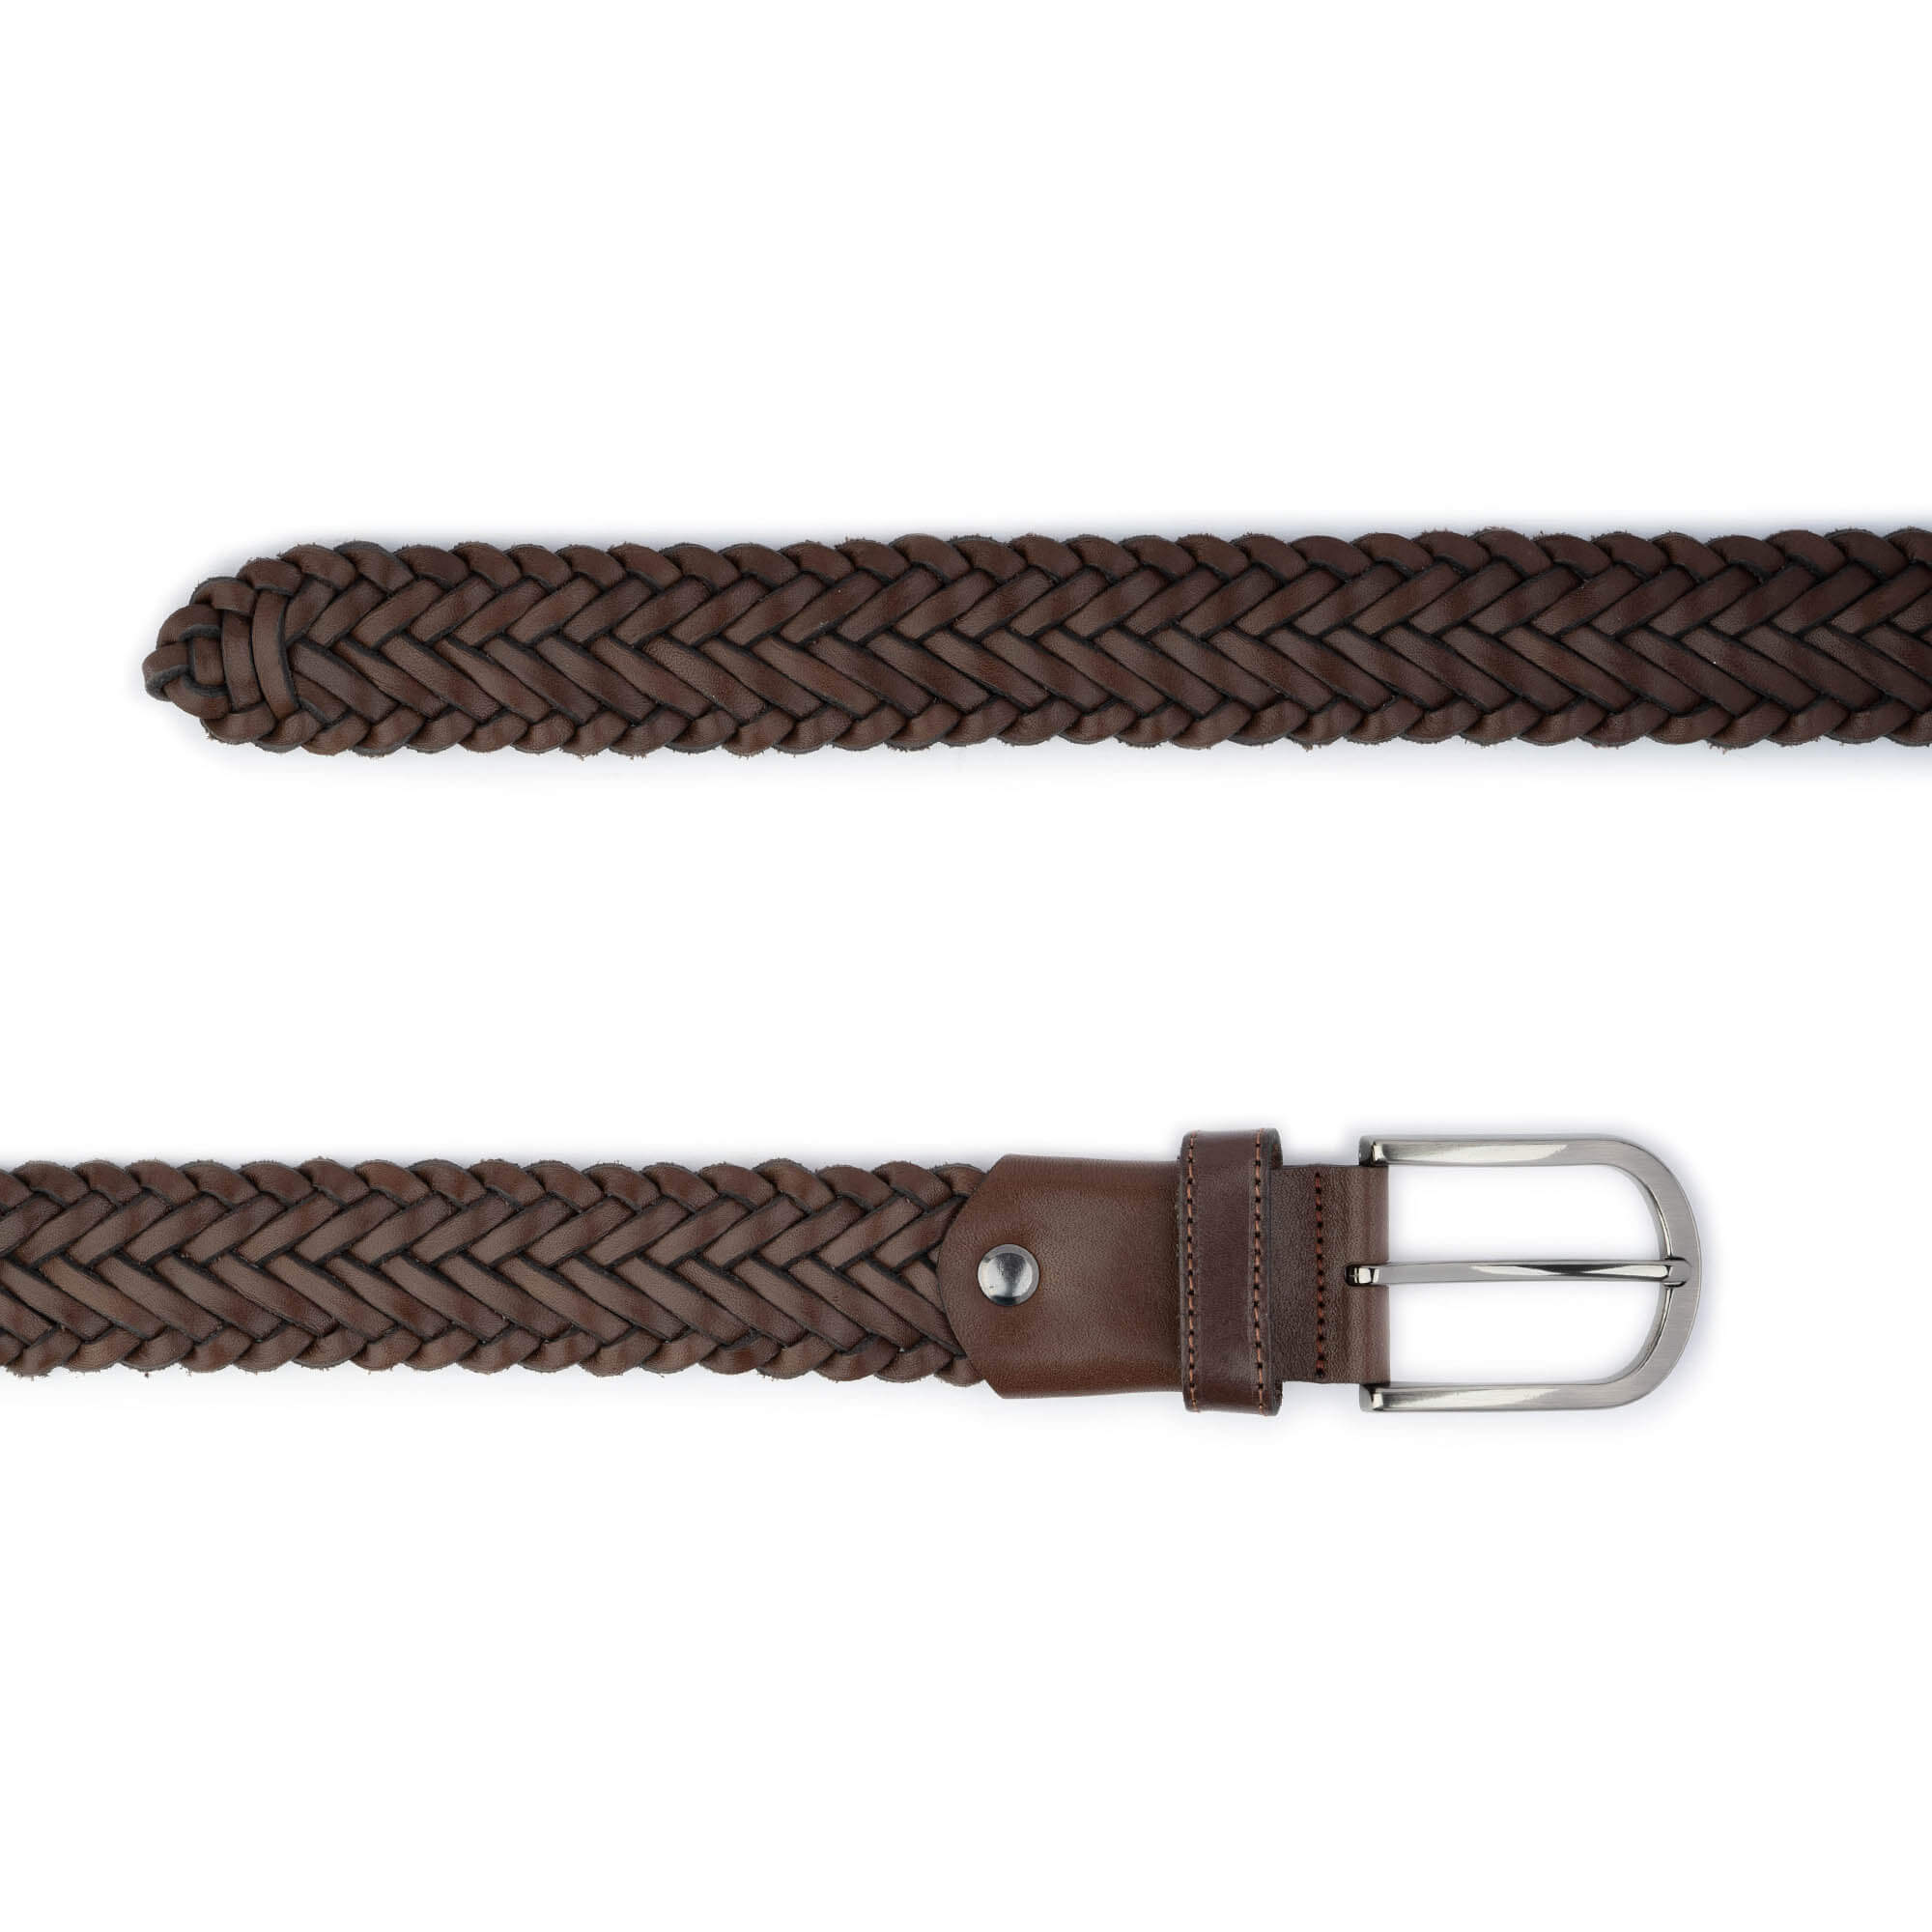 Buy Mens Belt With No Holes - Woven Dark Brown